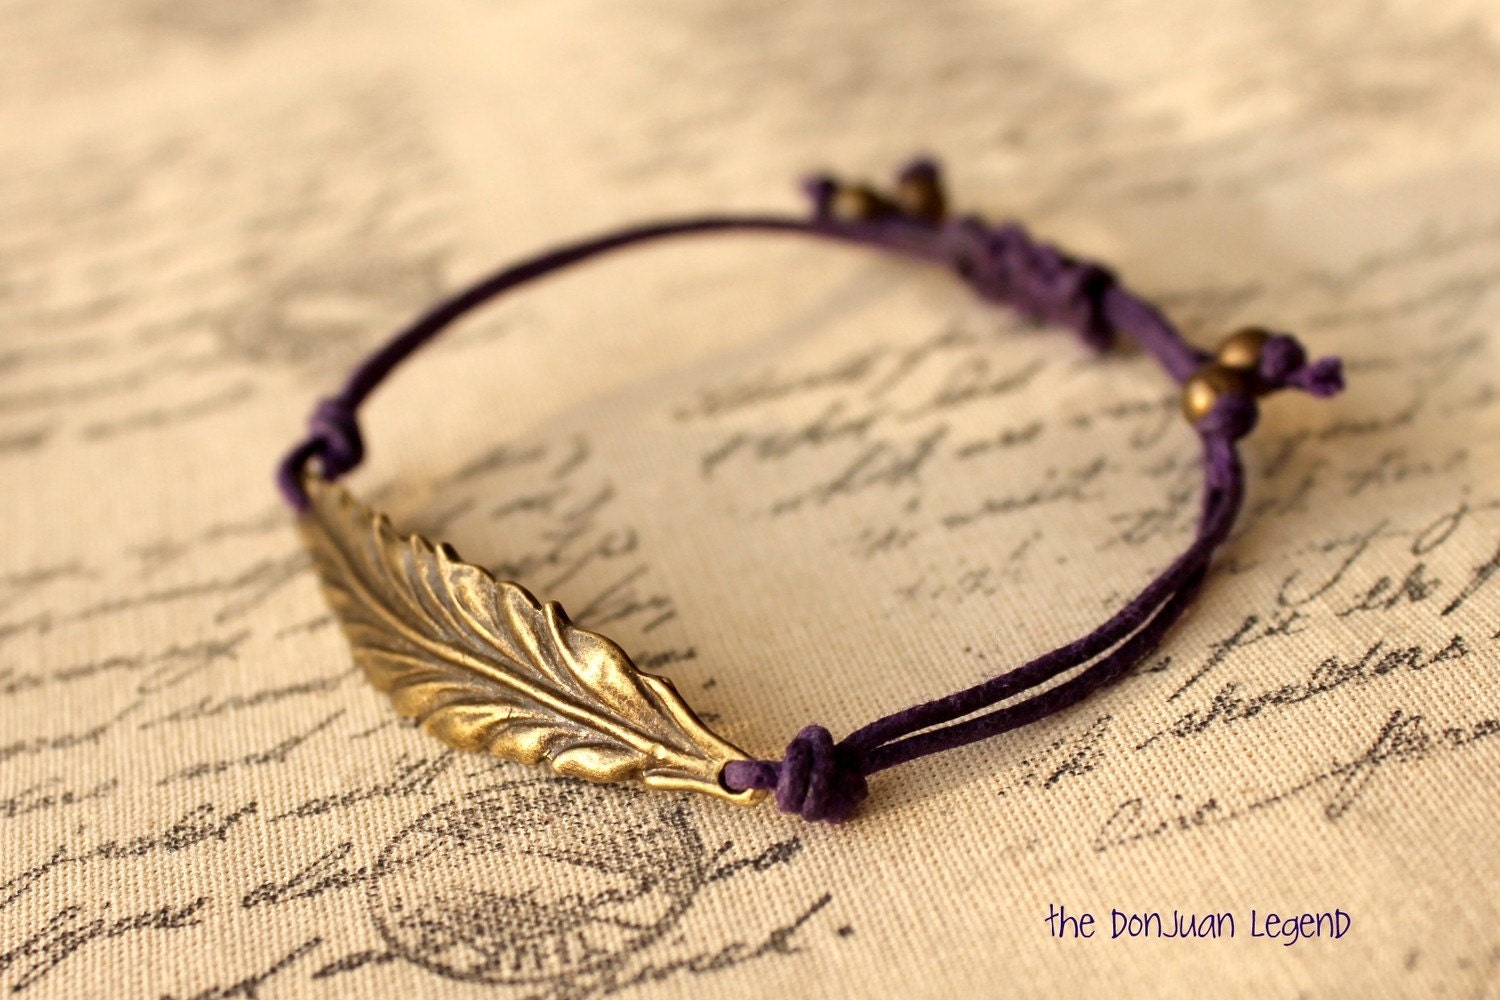 Free spirit - Feather adjustable bracelet in dark purple